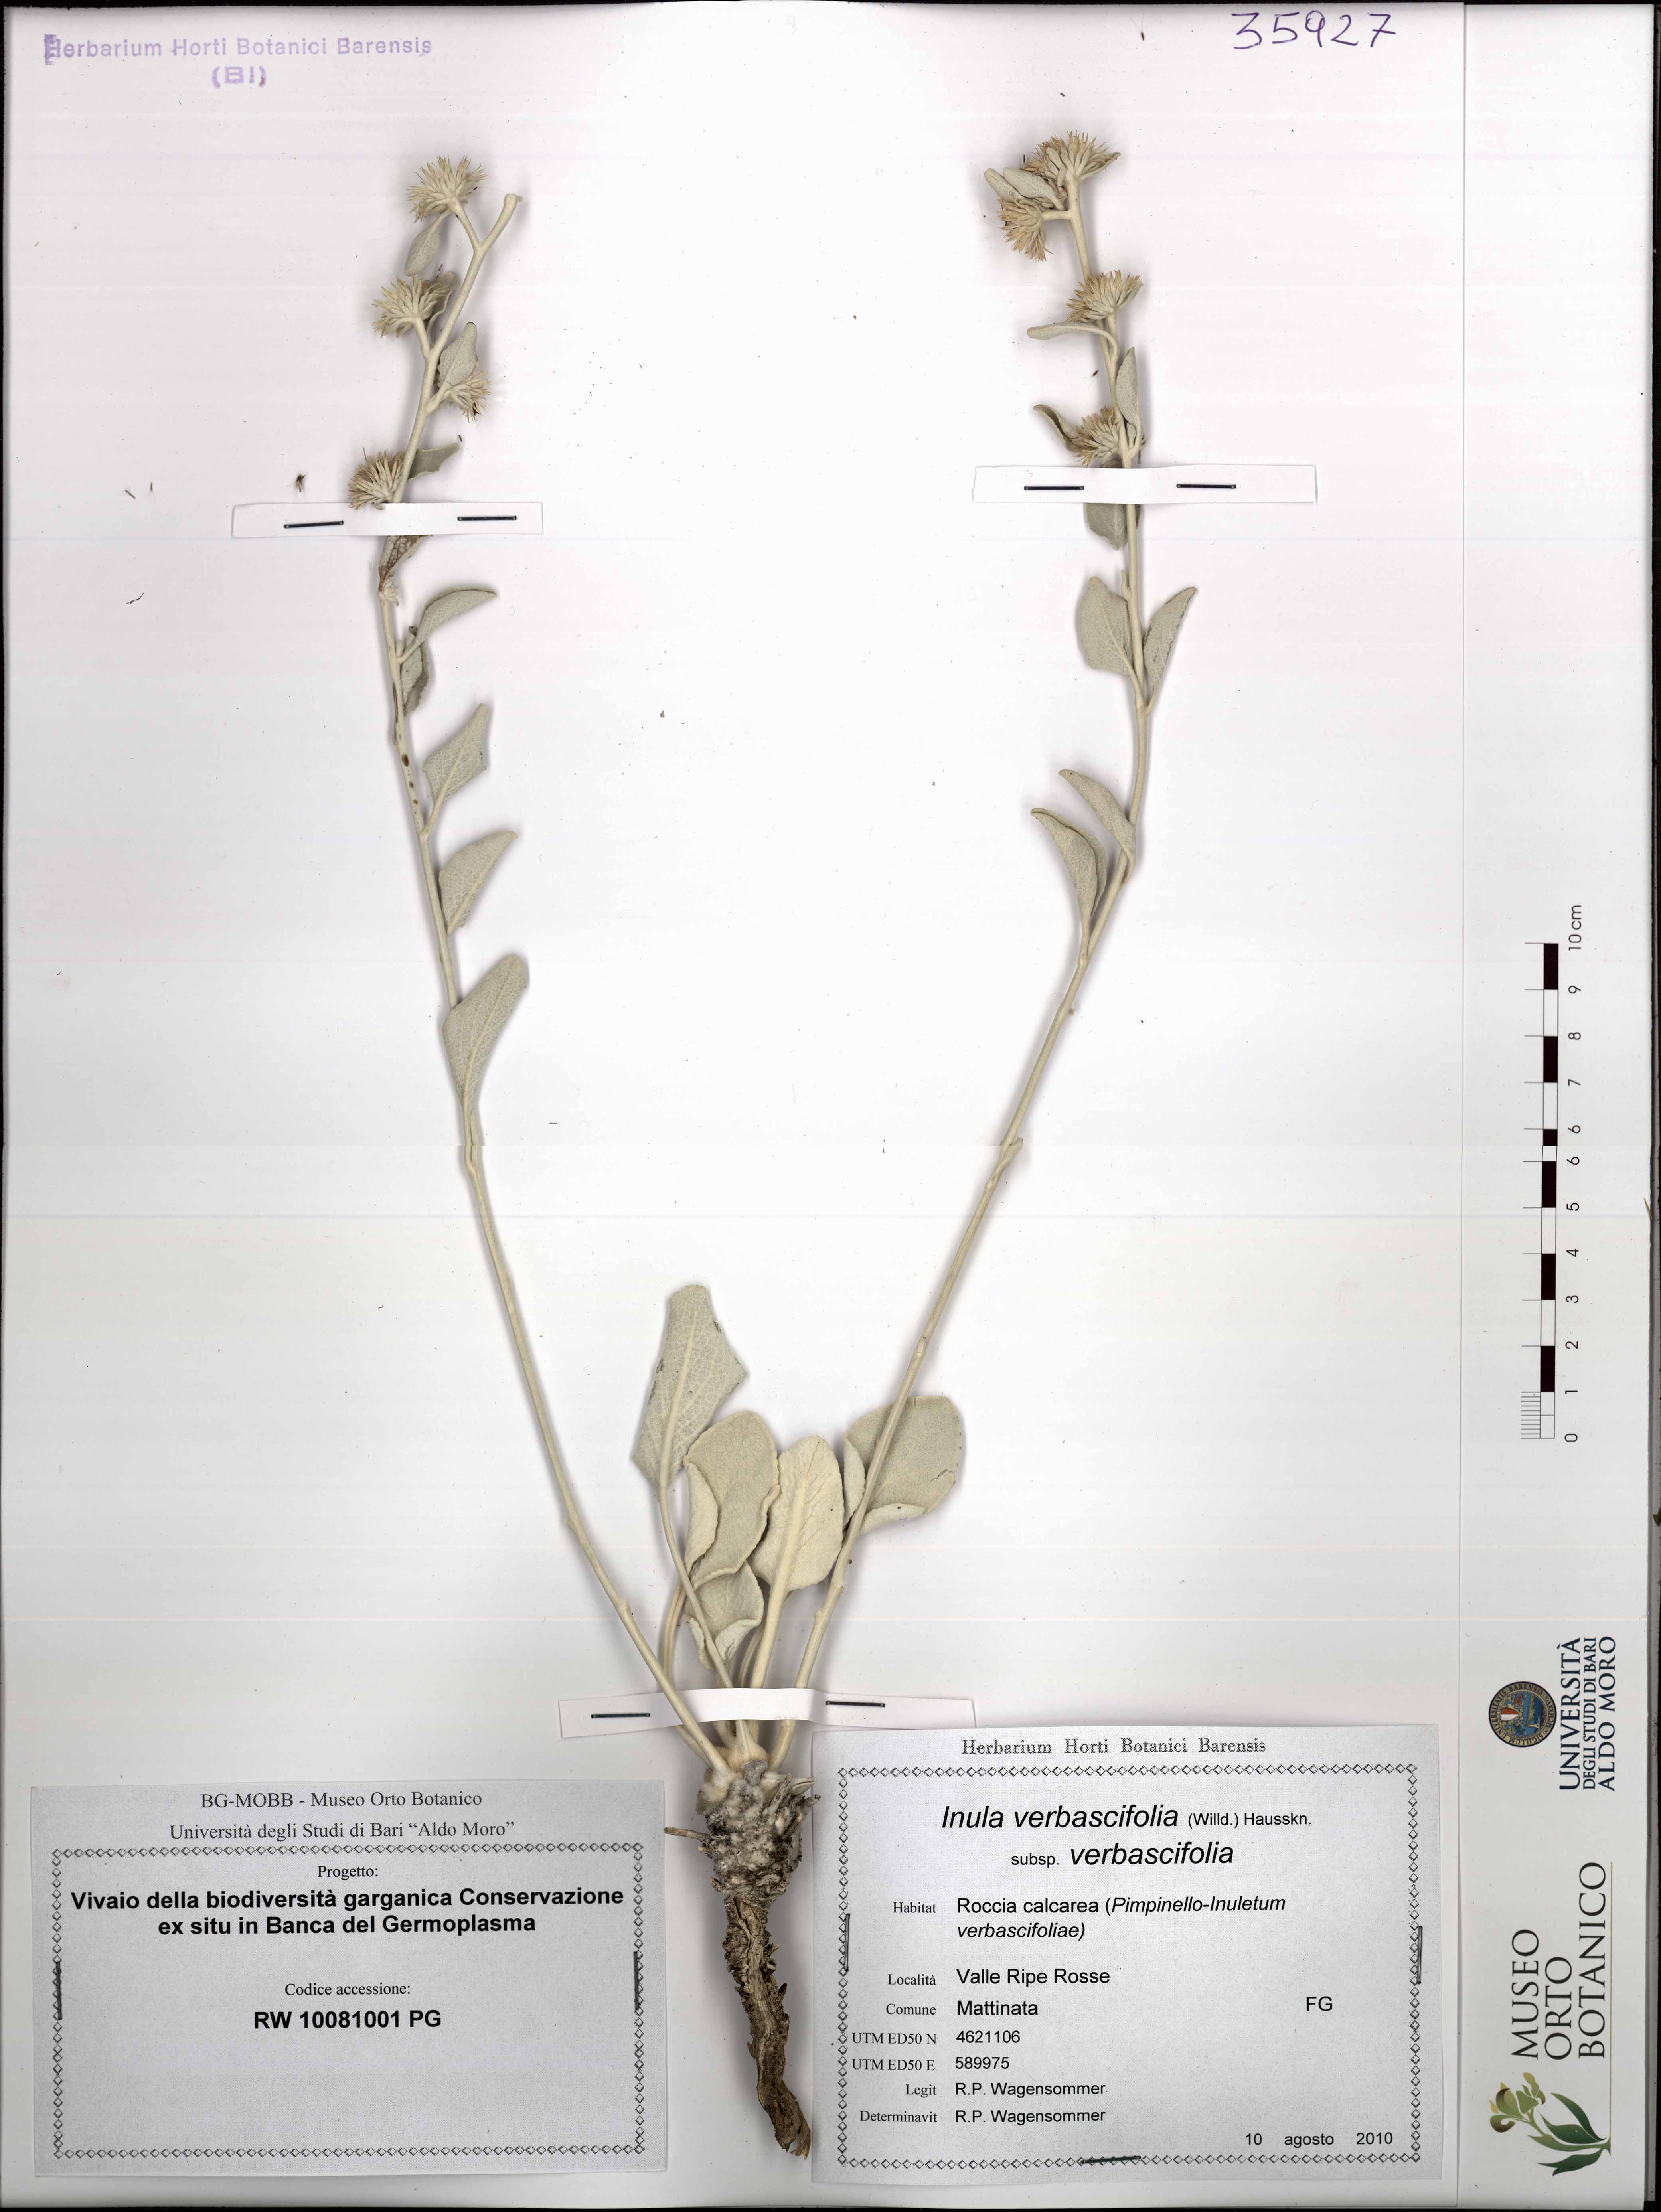 Inula verbascifolia (Willd.) Hausskn. subsp. verbascifolia - campione (10/08/2010)